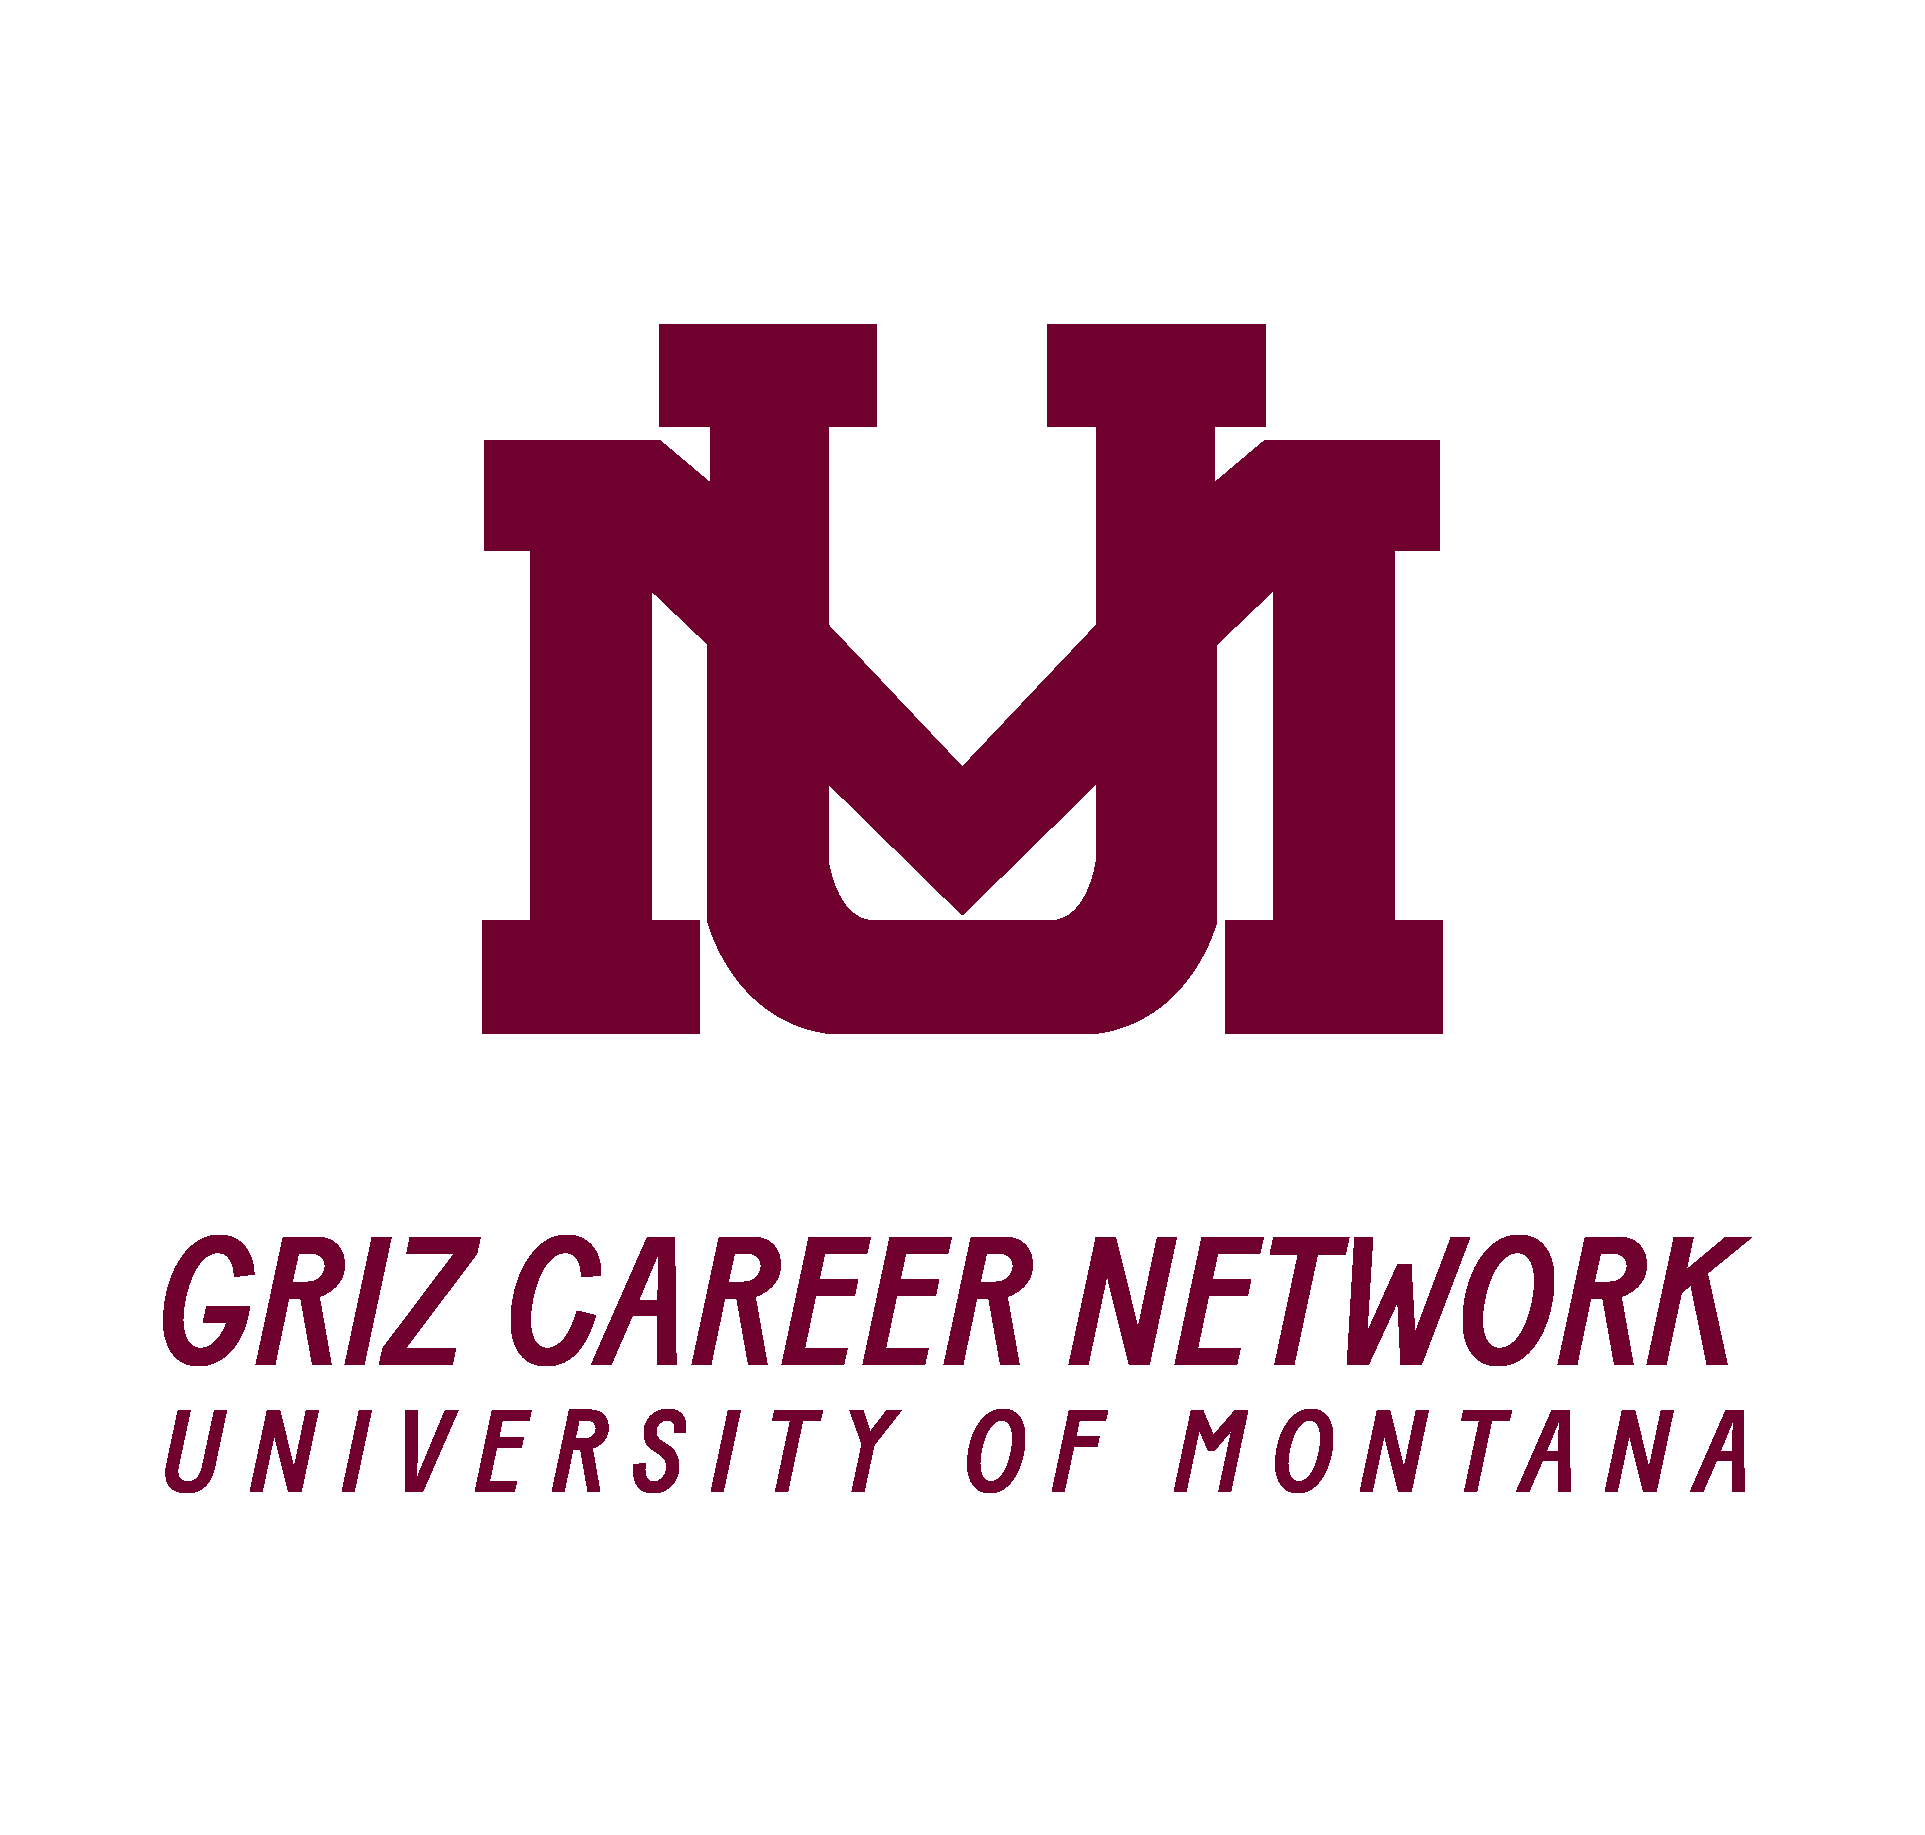 Griz Career Network logo with interlocking U and M